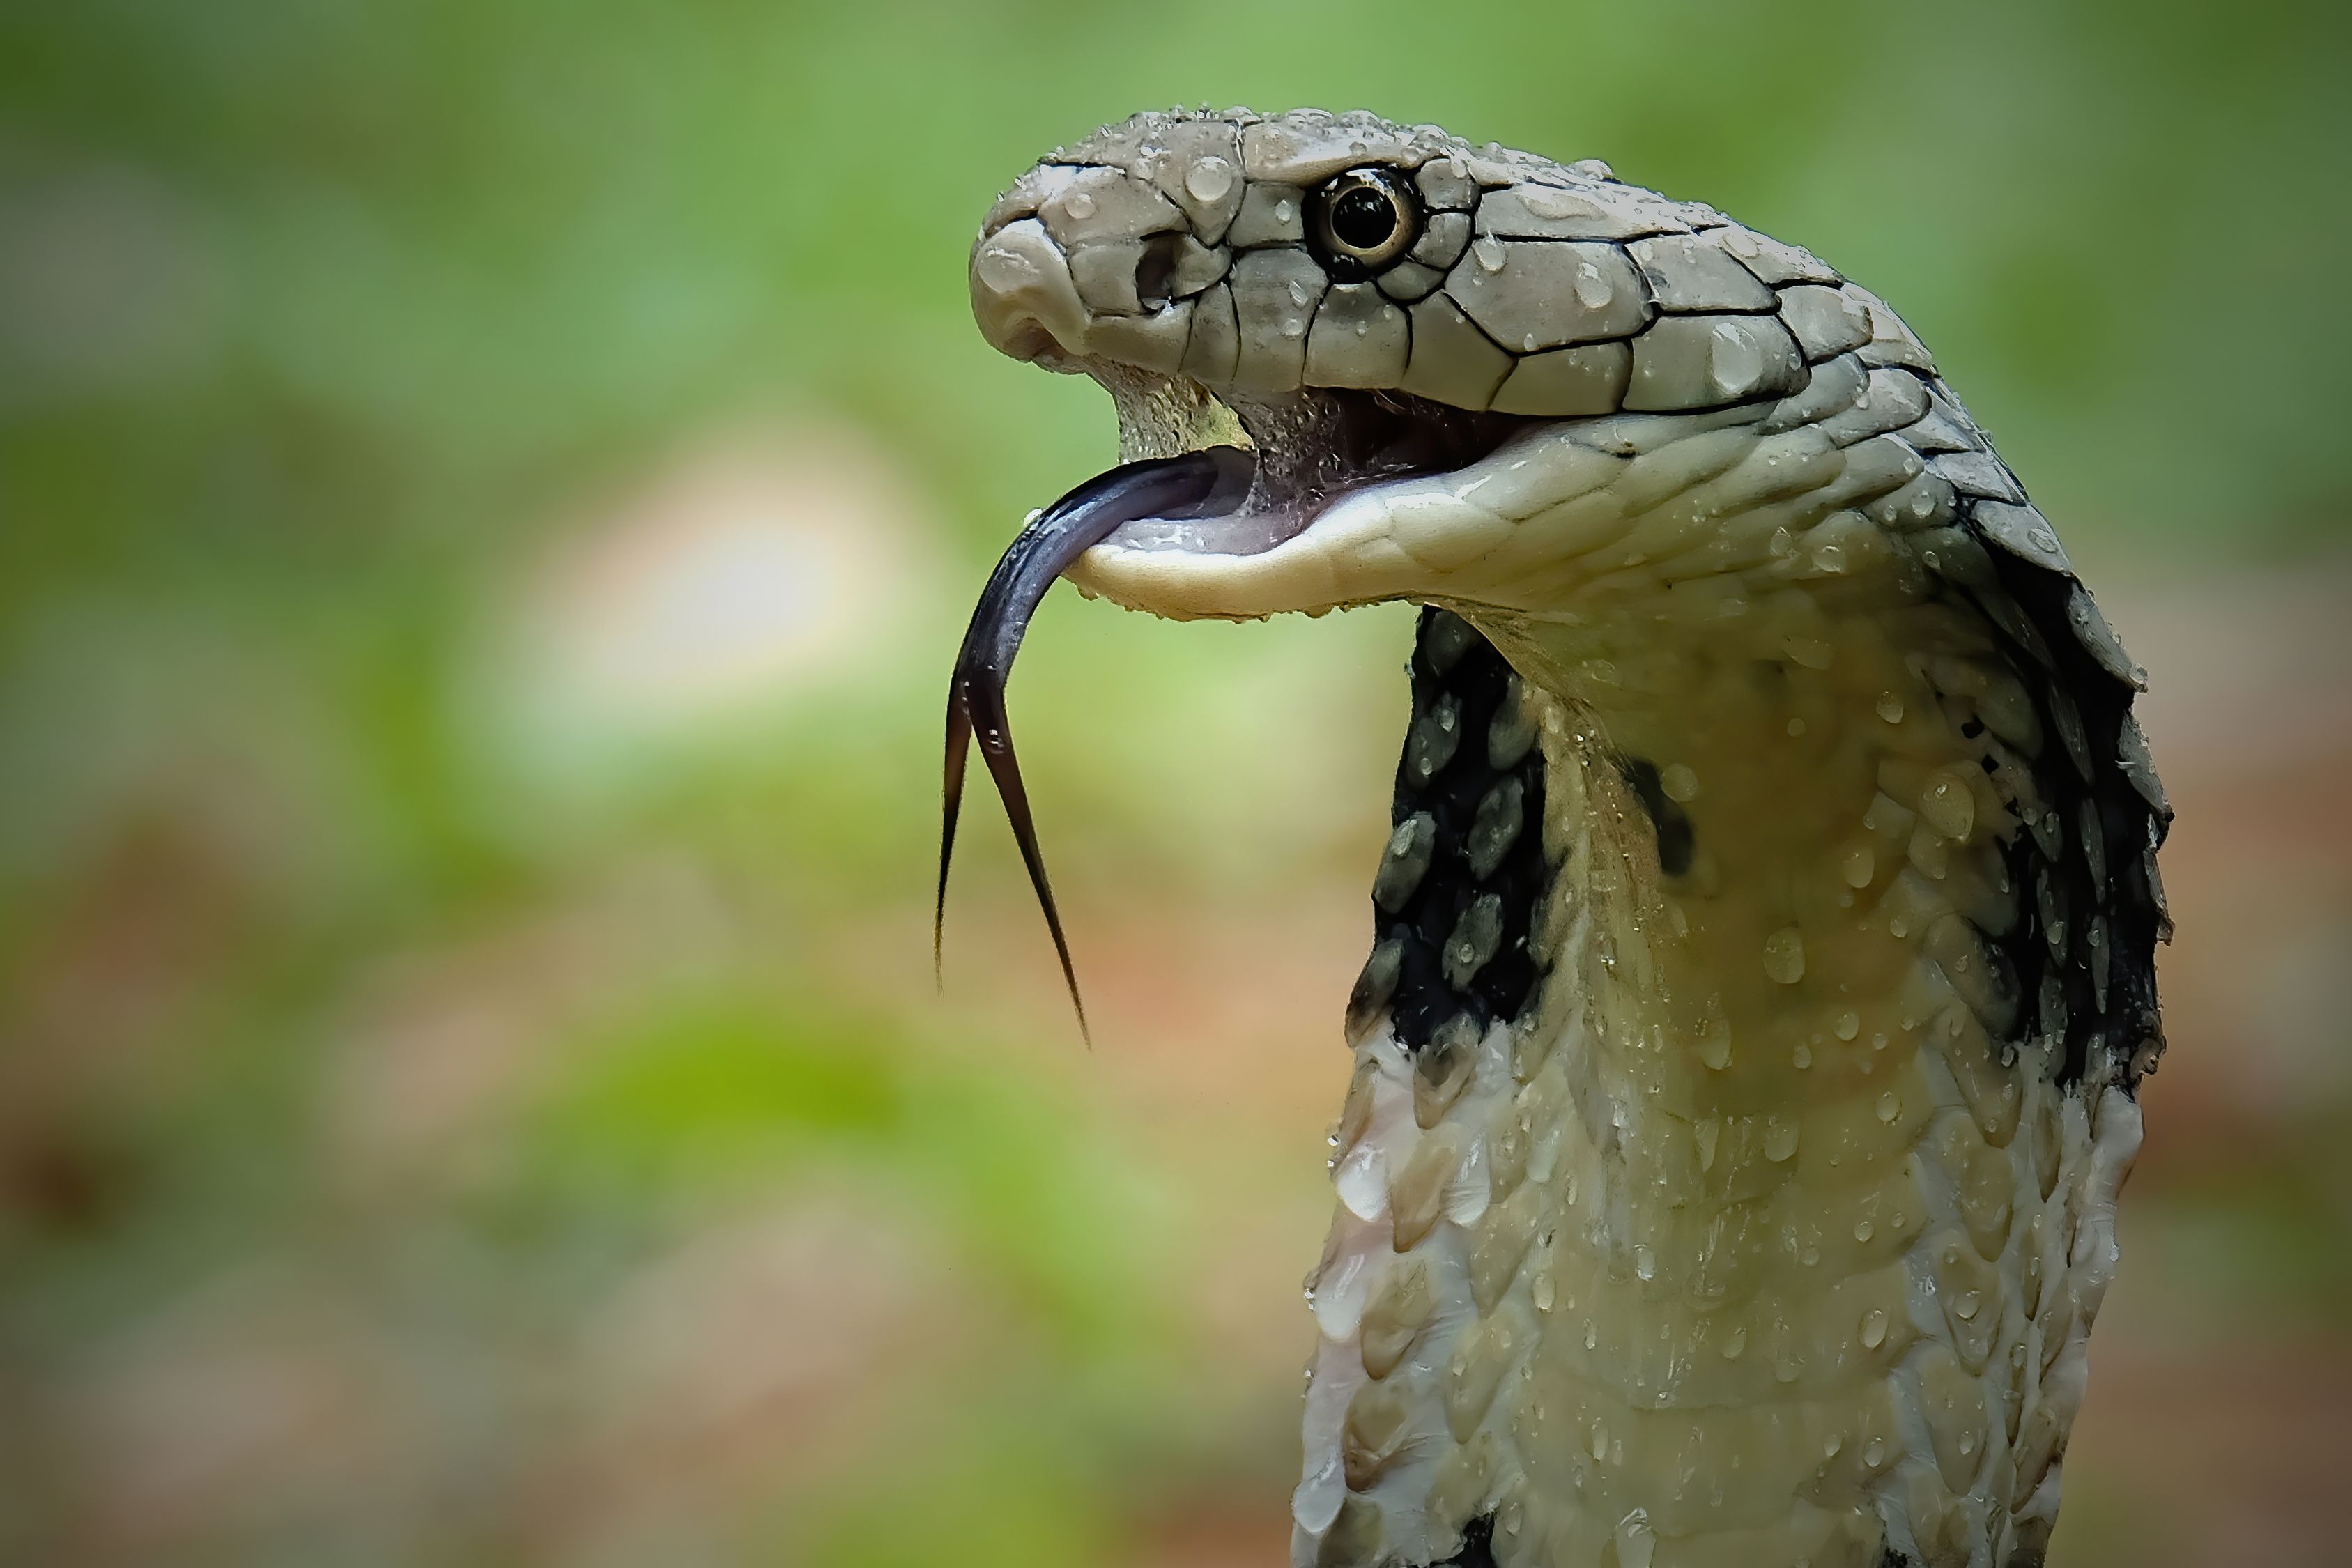 Can a Human Survive a King Cobra Bite?